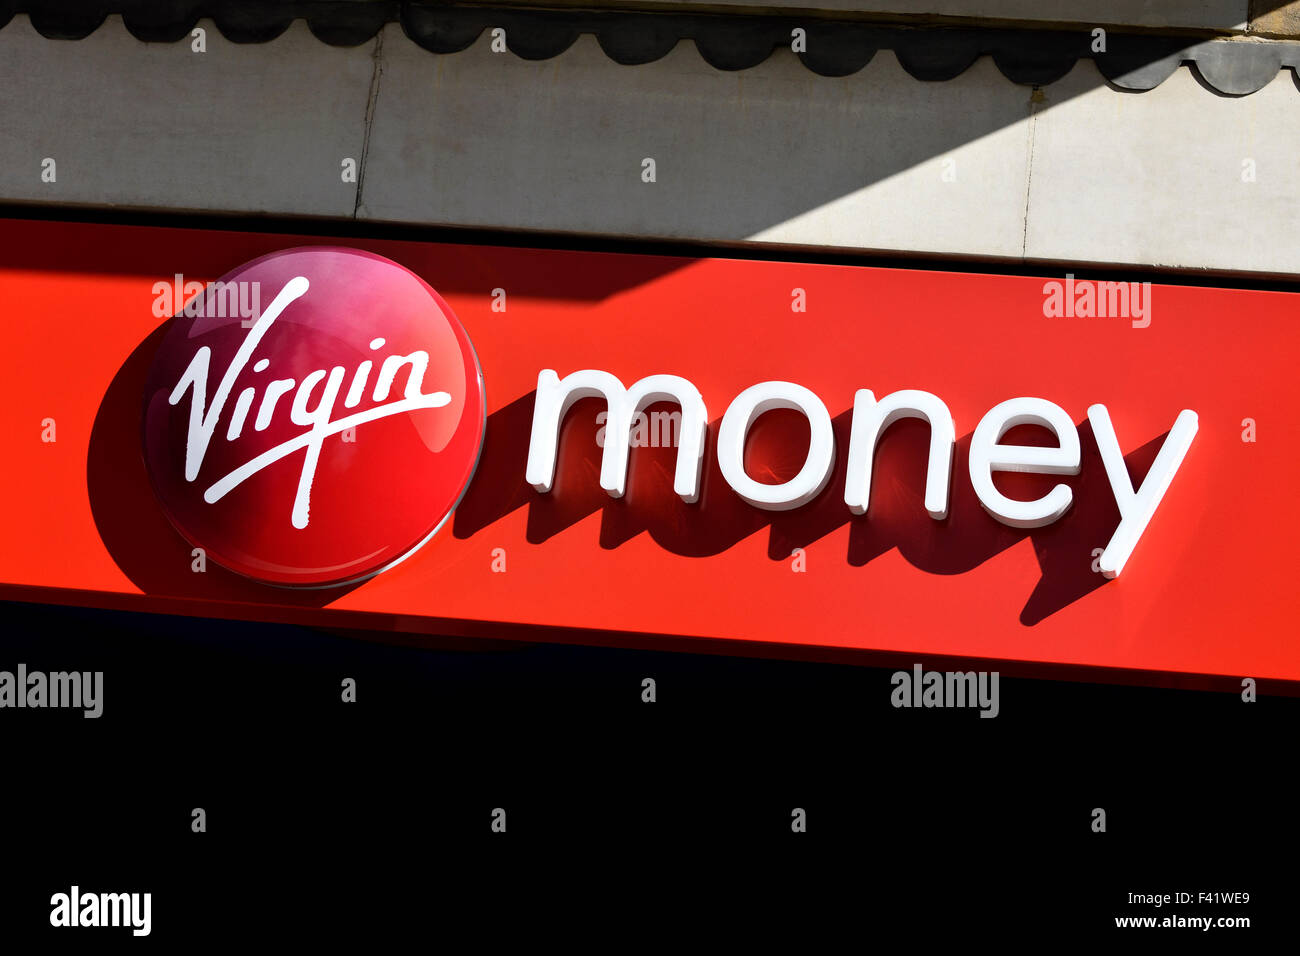 London, England, UK. Virgin Money bank frontage Stock Photo